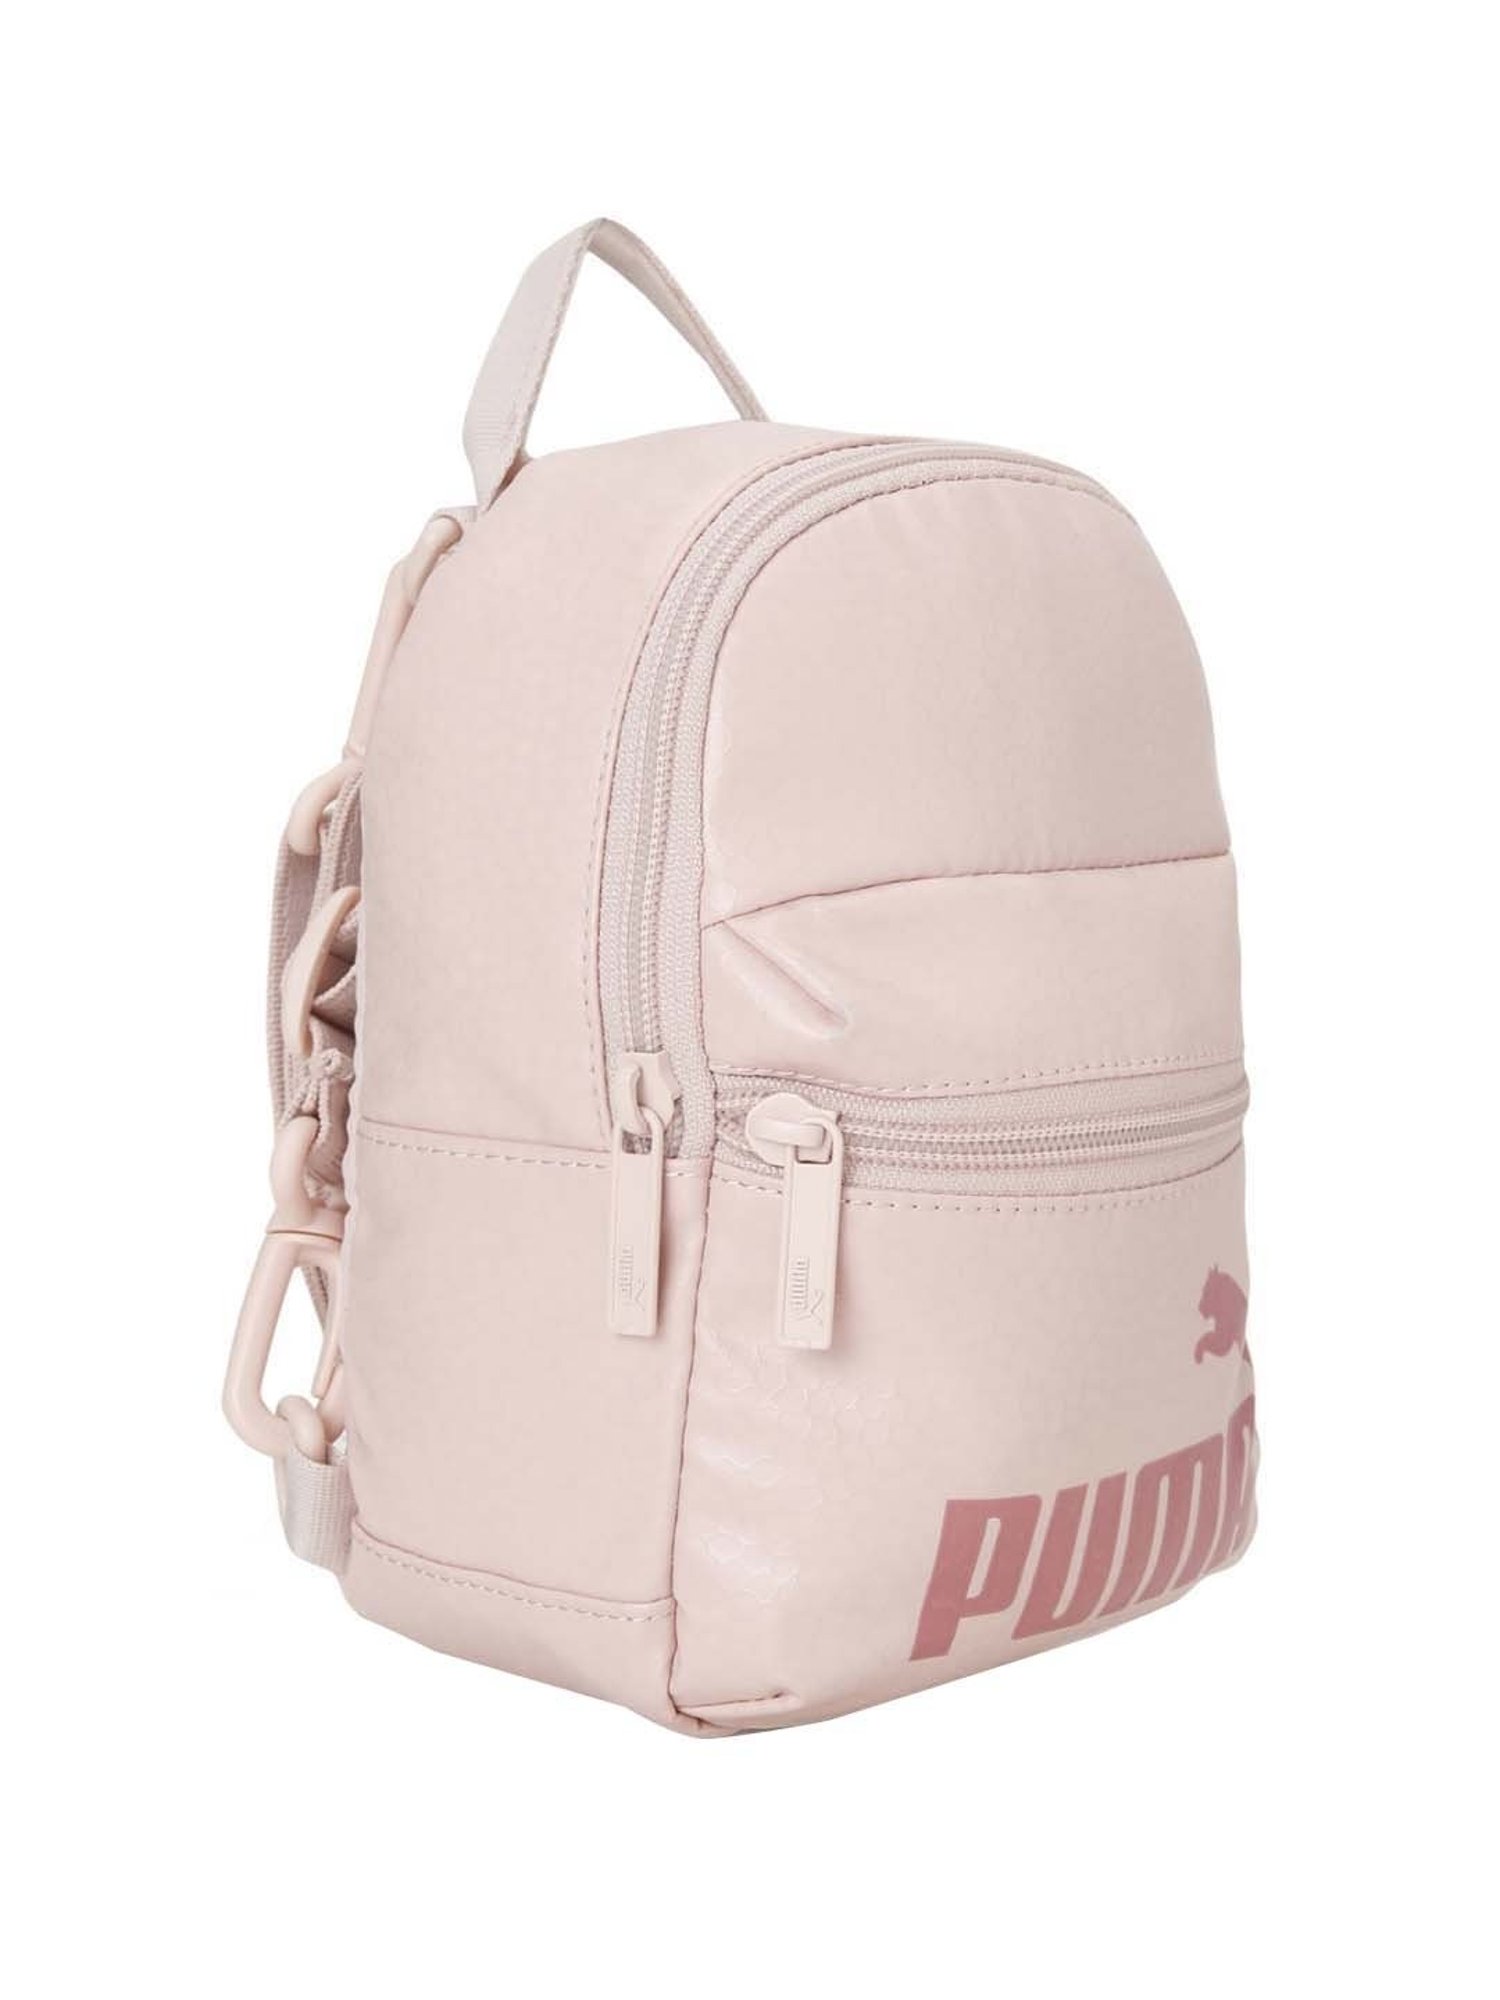 Puma Leather Bags For Women Handbags - Buy Puma Leather Bags For Women  Handbags online in India